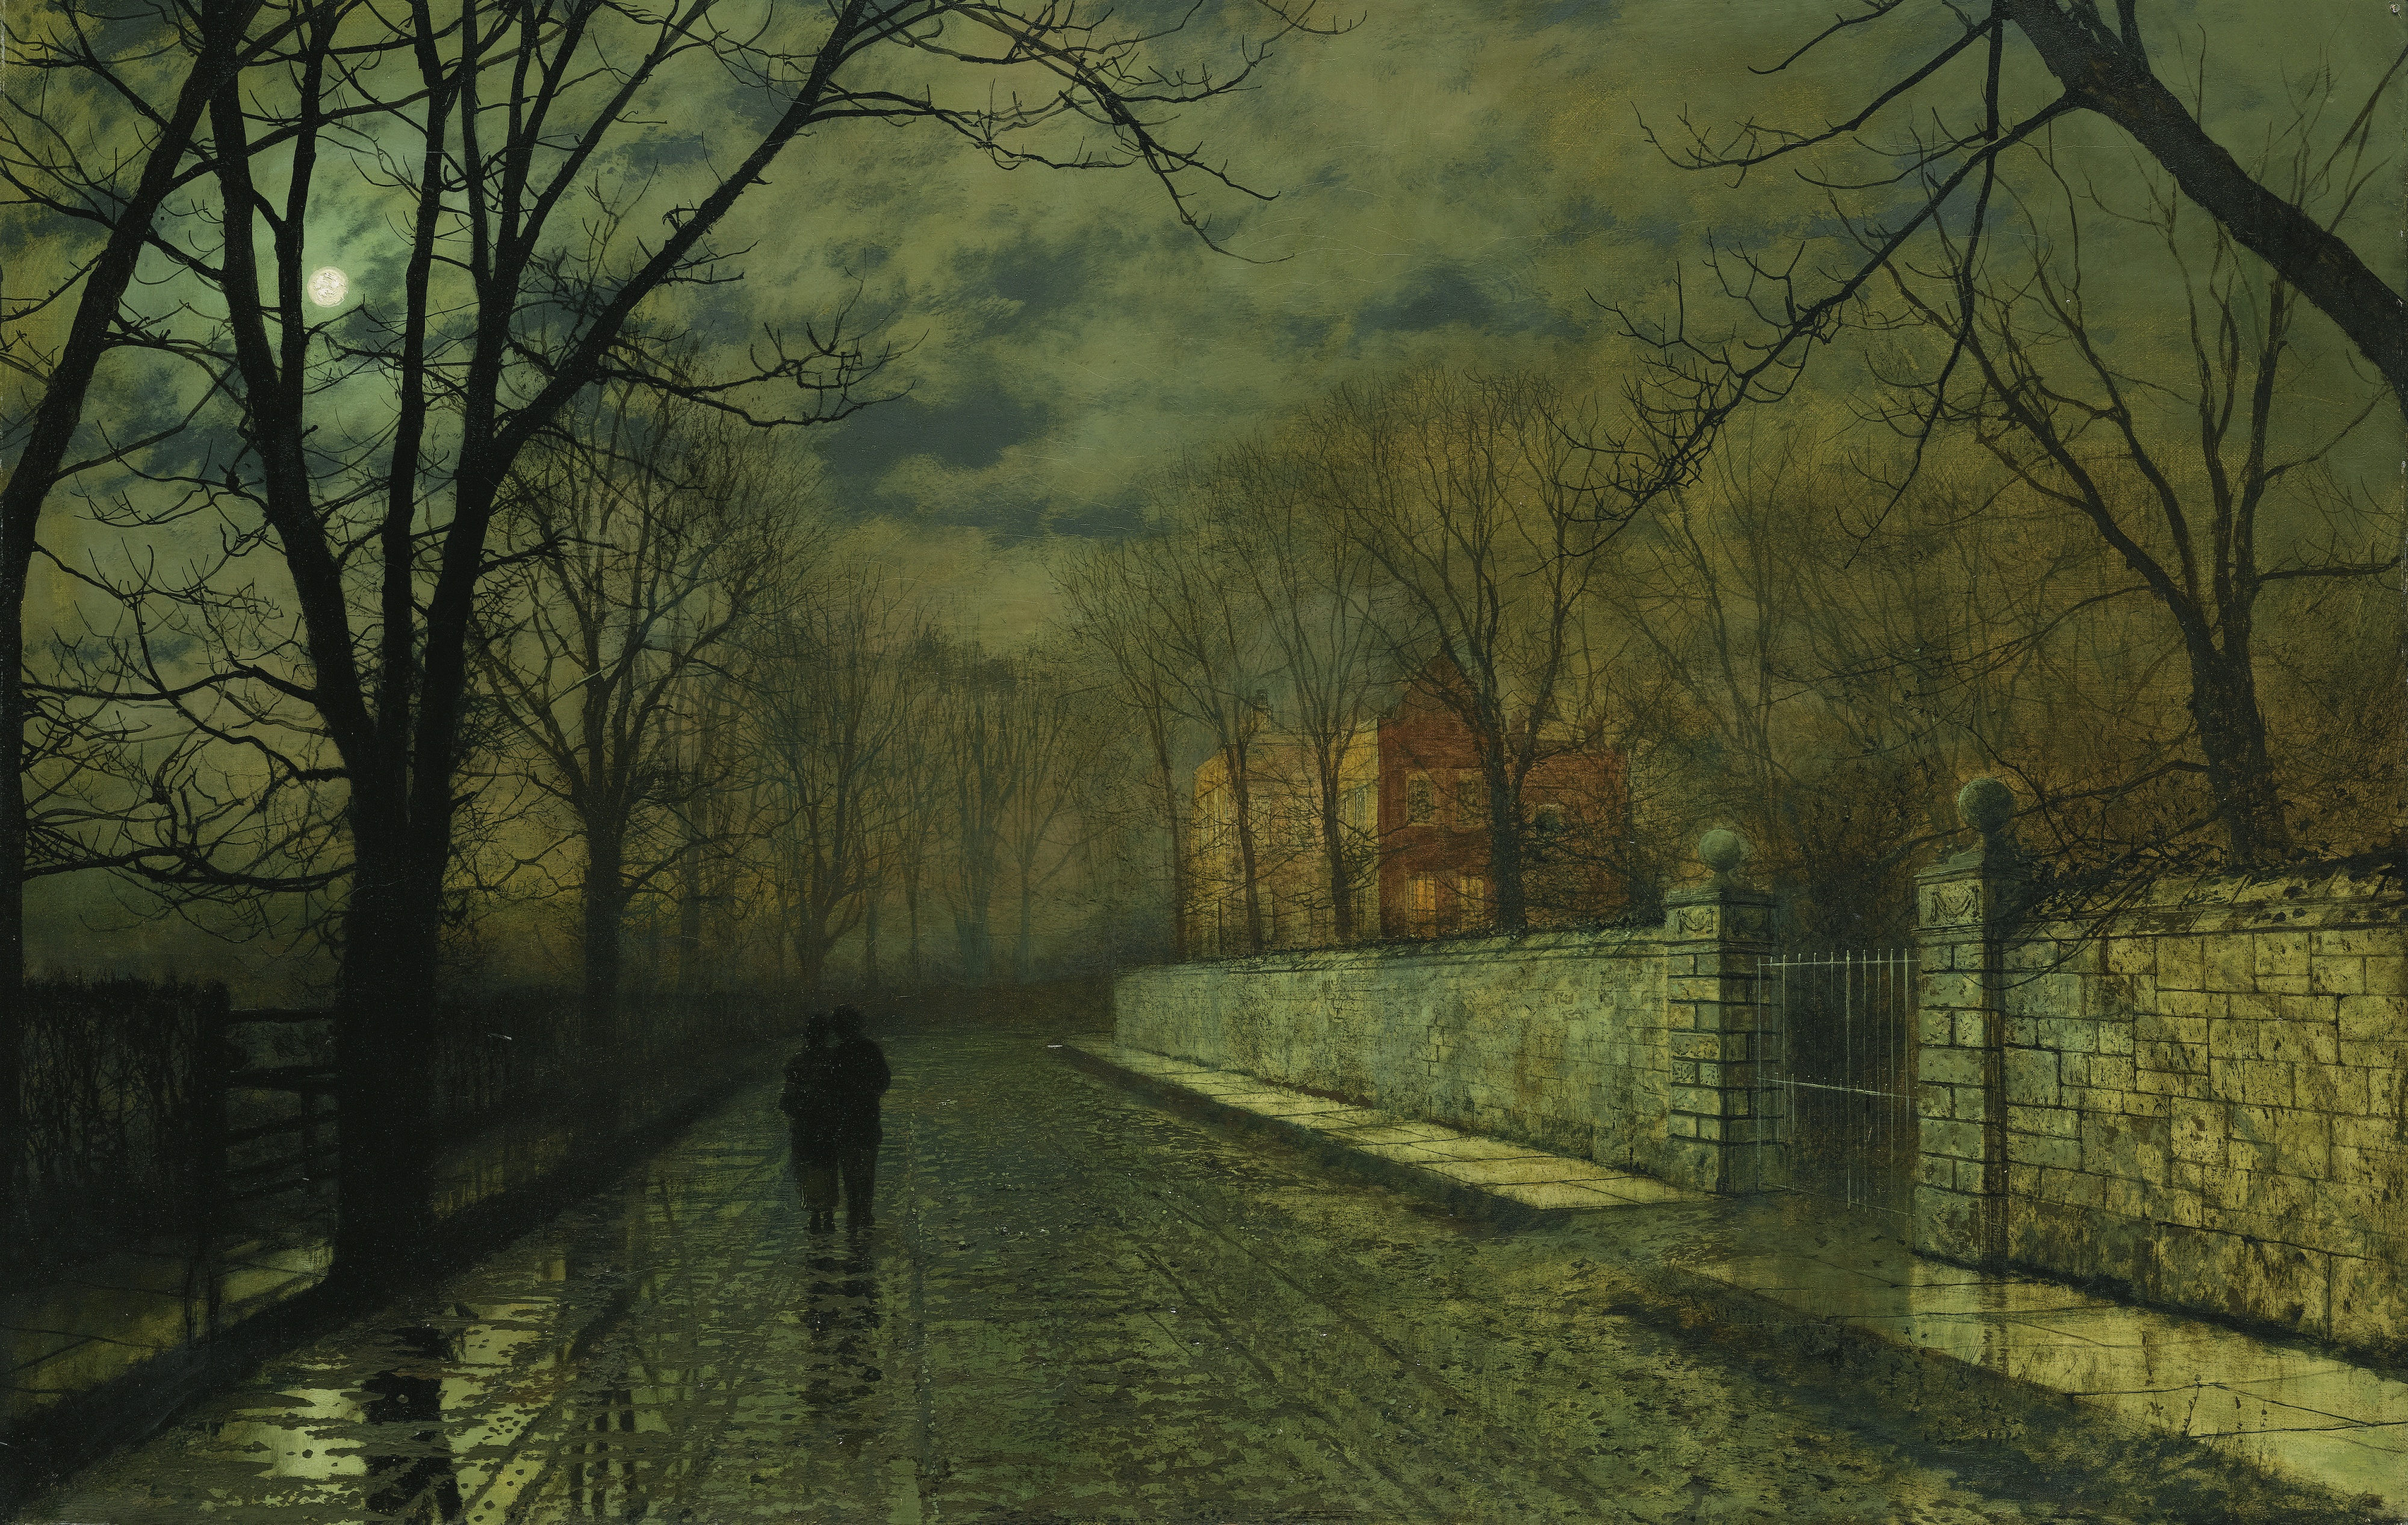 figures-in-a-moonlit-lane-after-rain by John Atkinson Grimshaw